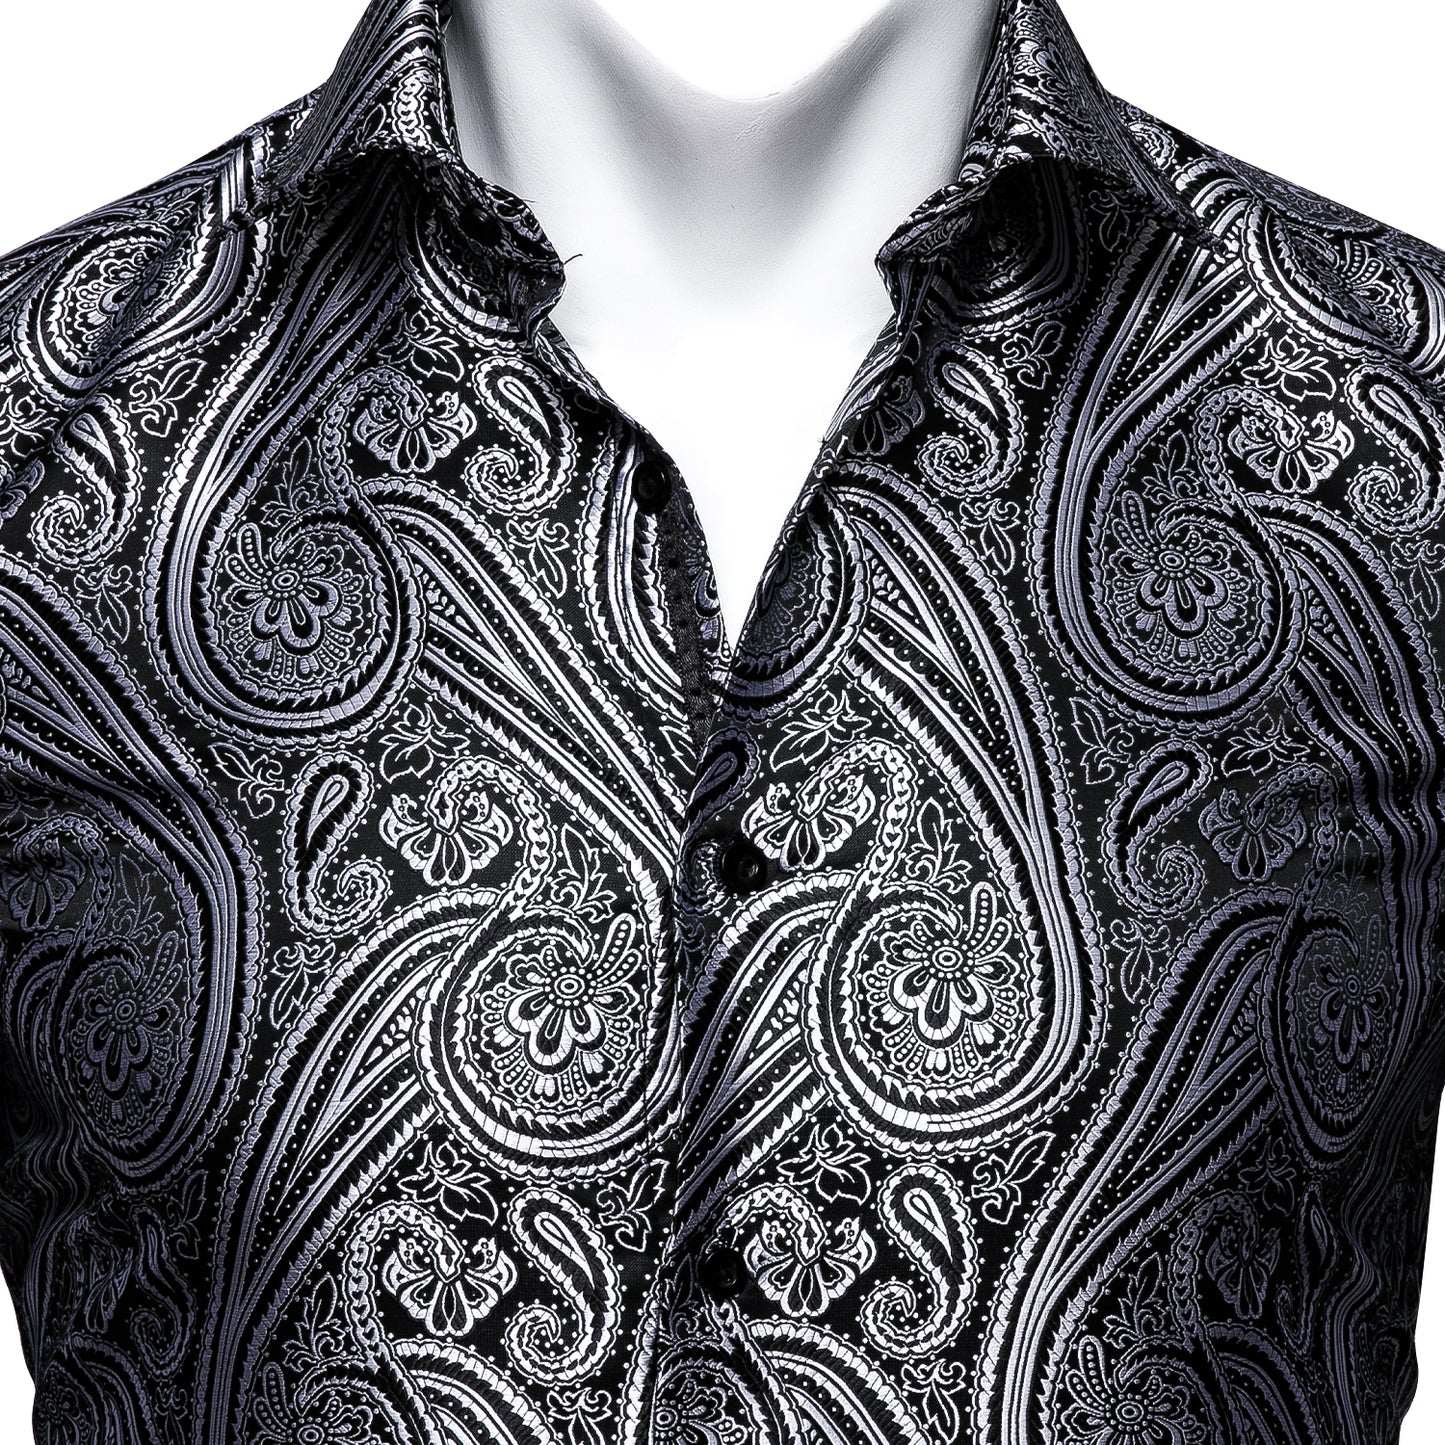 Novelty Silky Shirt - Charcoal Swirl